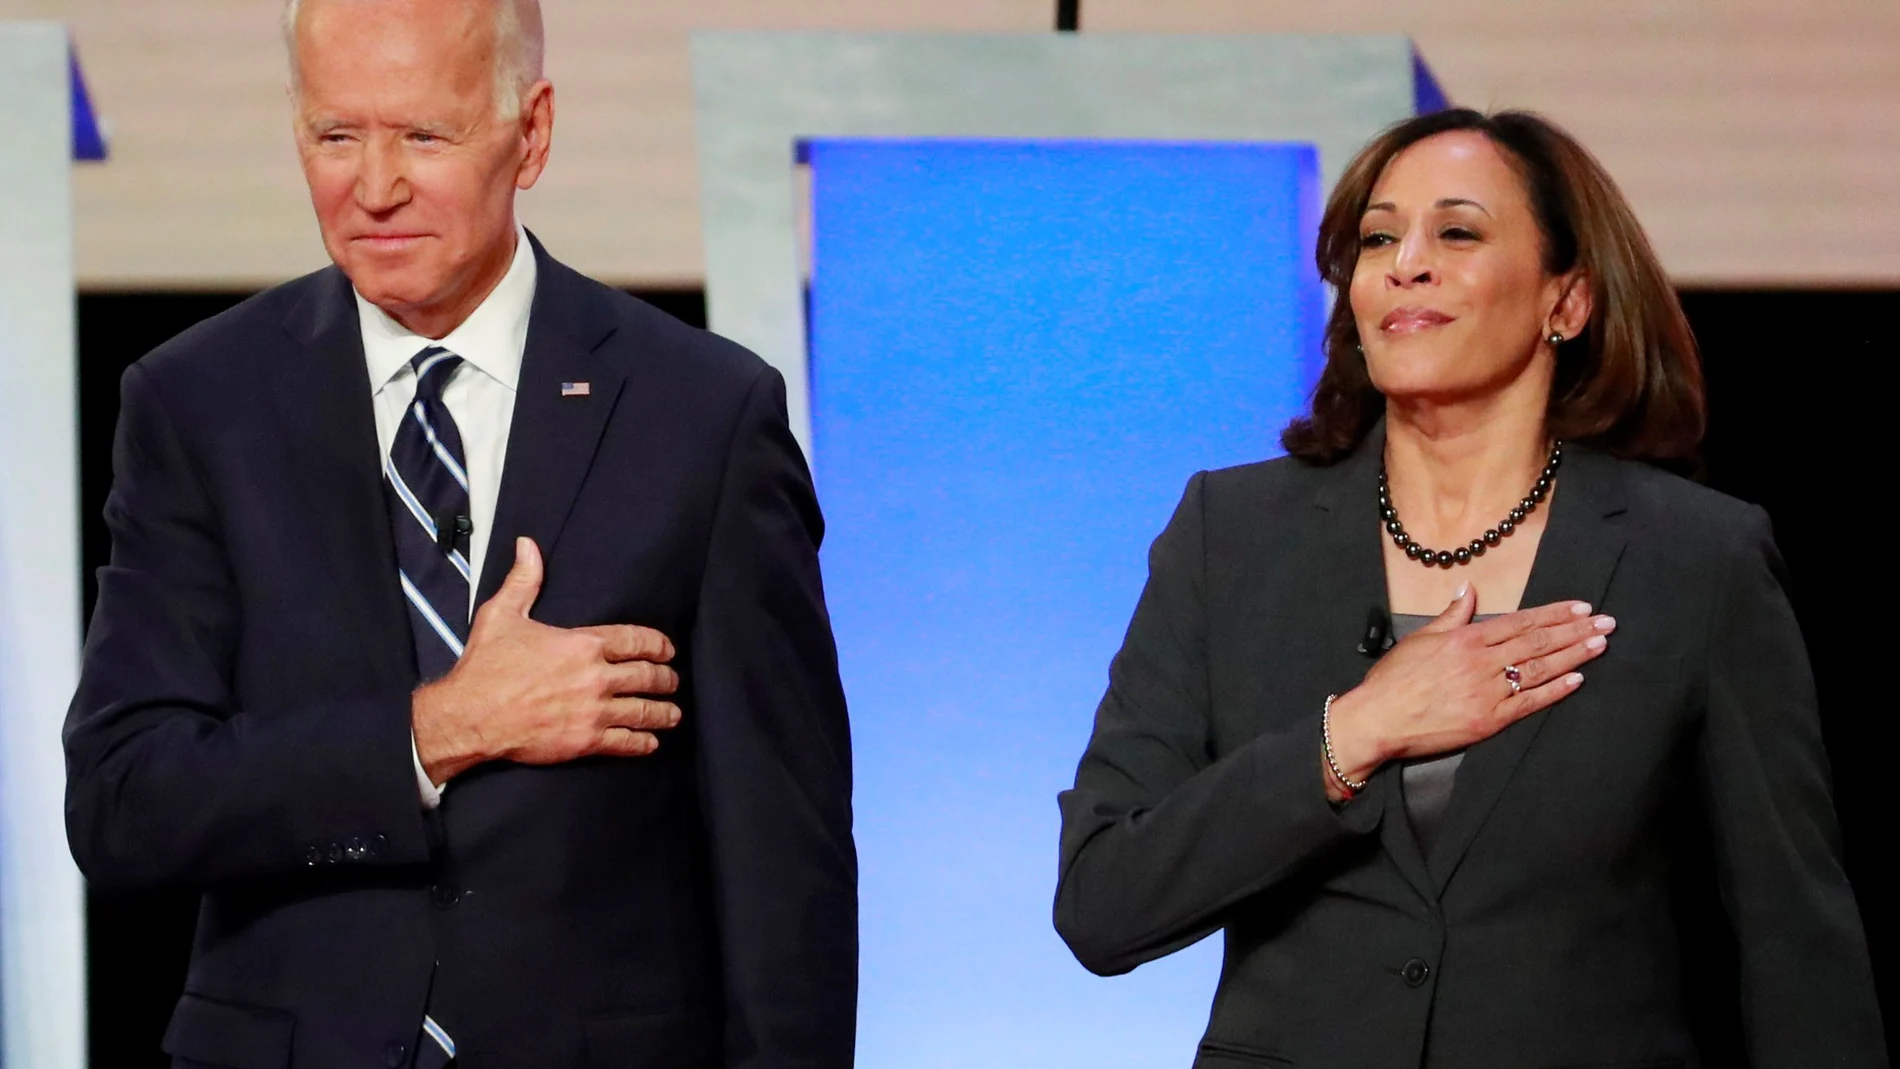 FILE PHOTO: Former Vice President Biden and Senator Harris take the stage in Detroit